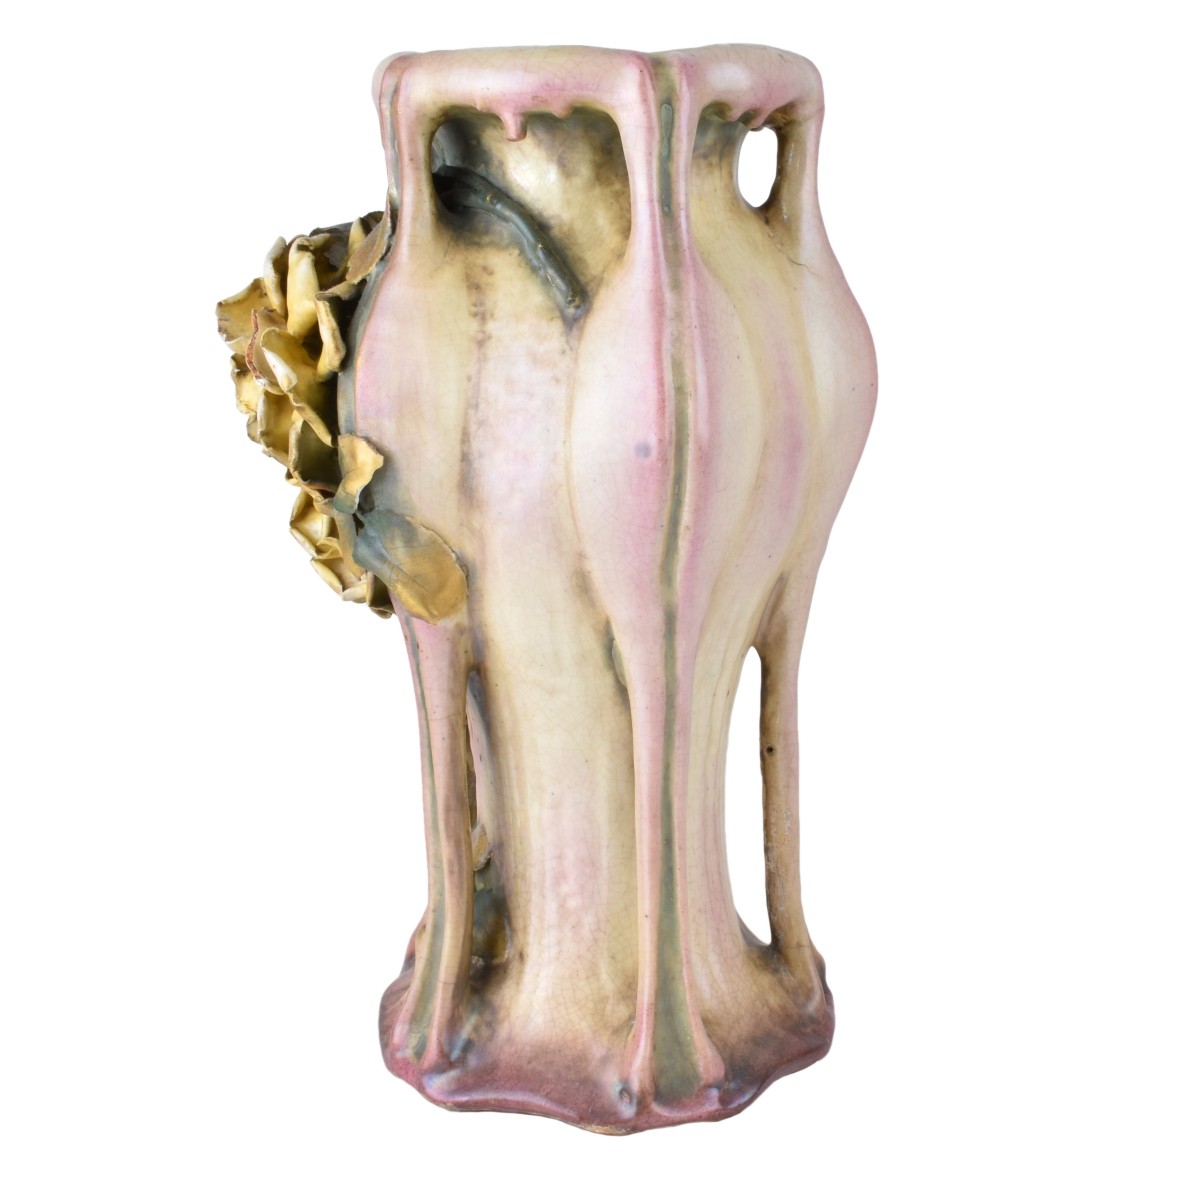 Amphora Edda Pottery Vase with Raised Flowers